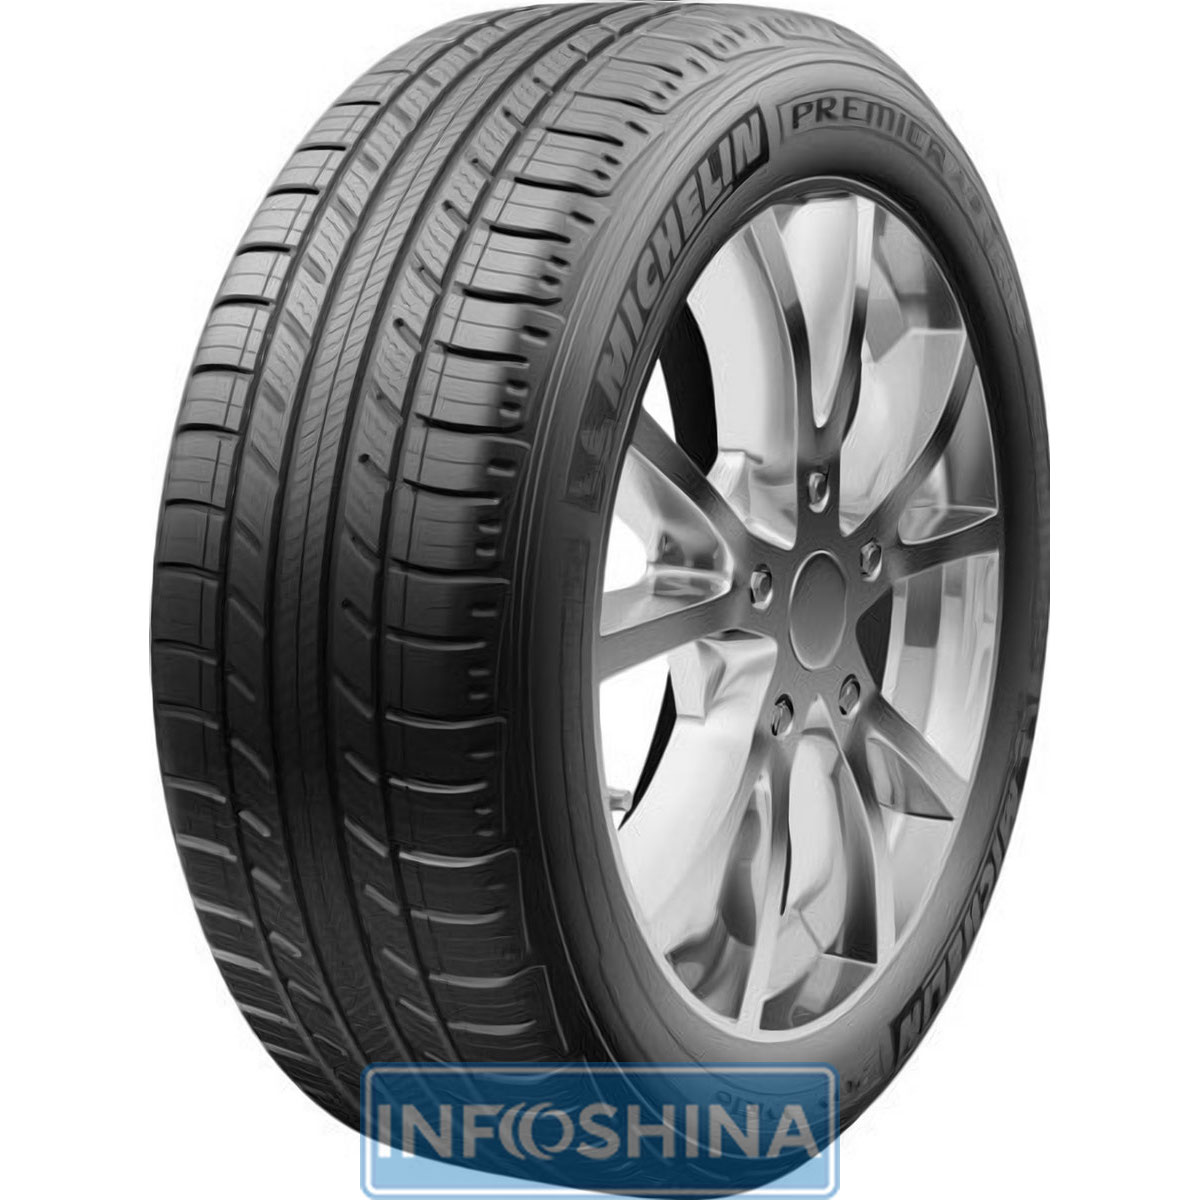 Купить шины Michelin Premier A/S 225/65 R16 100H